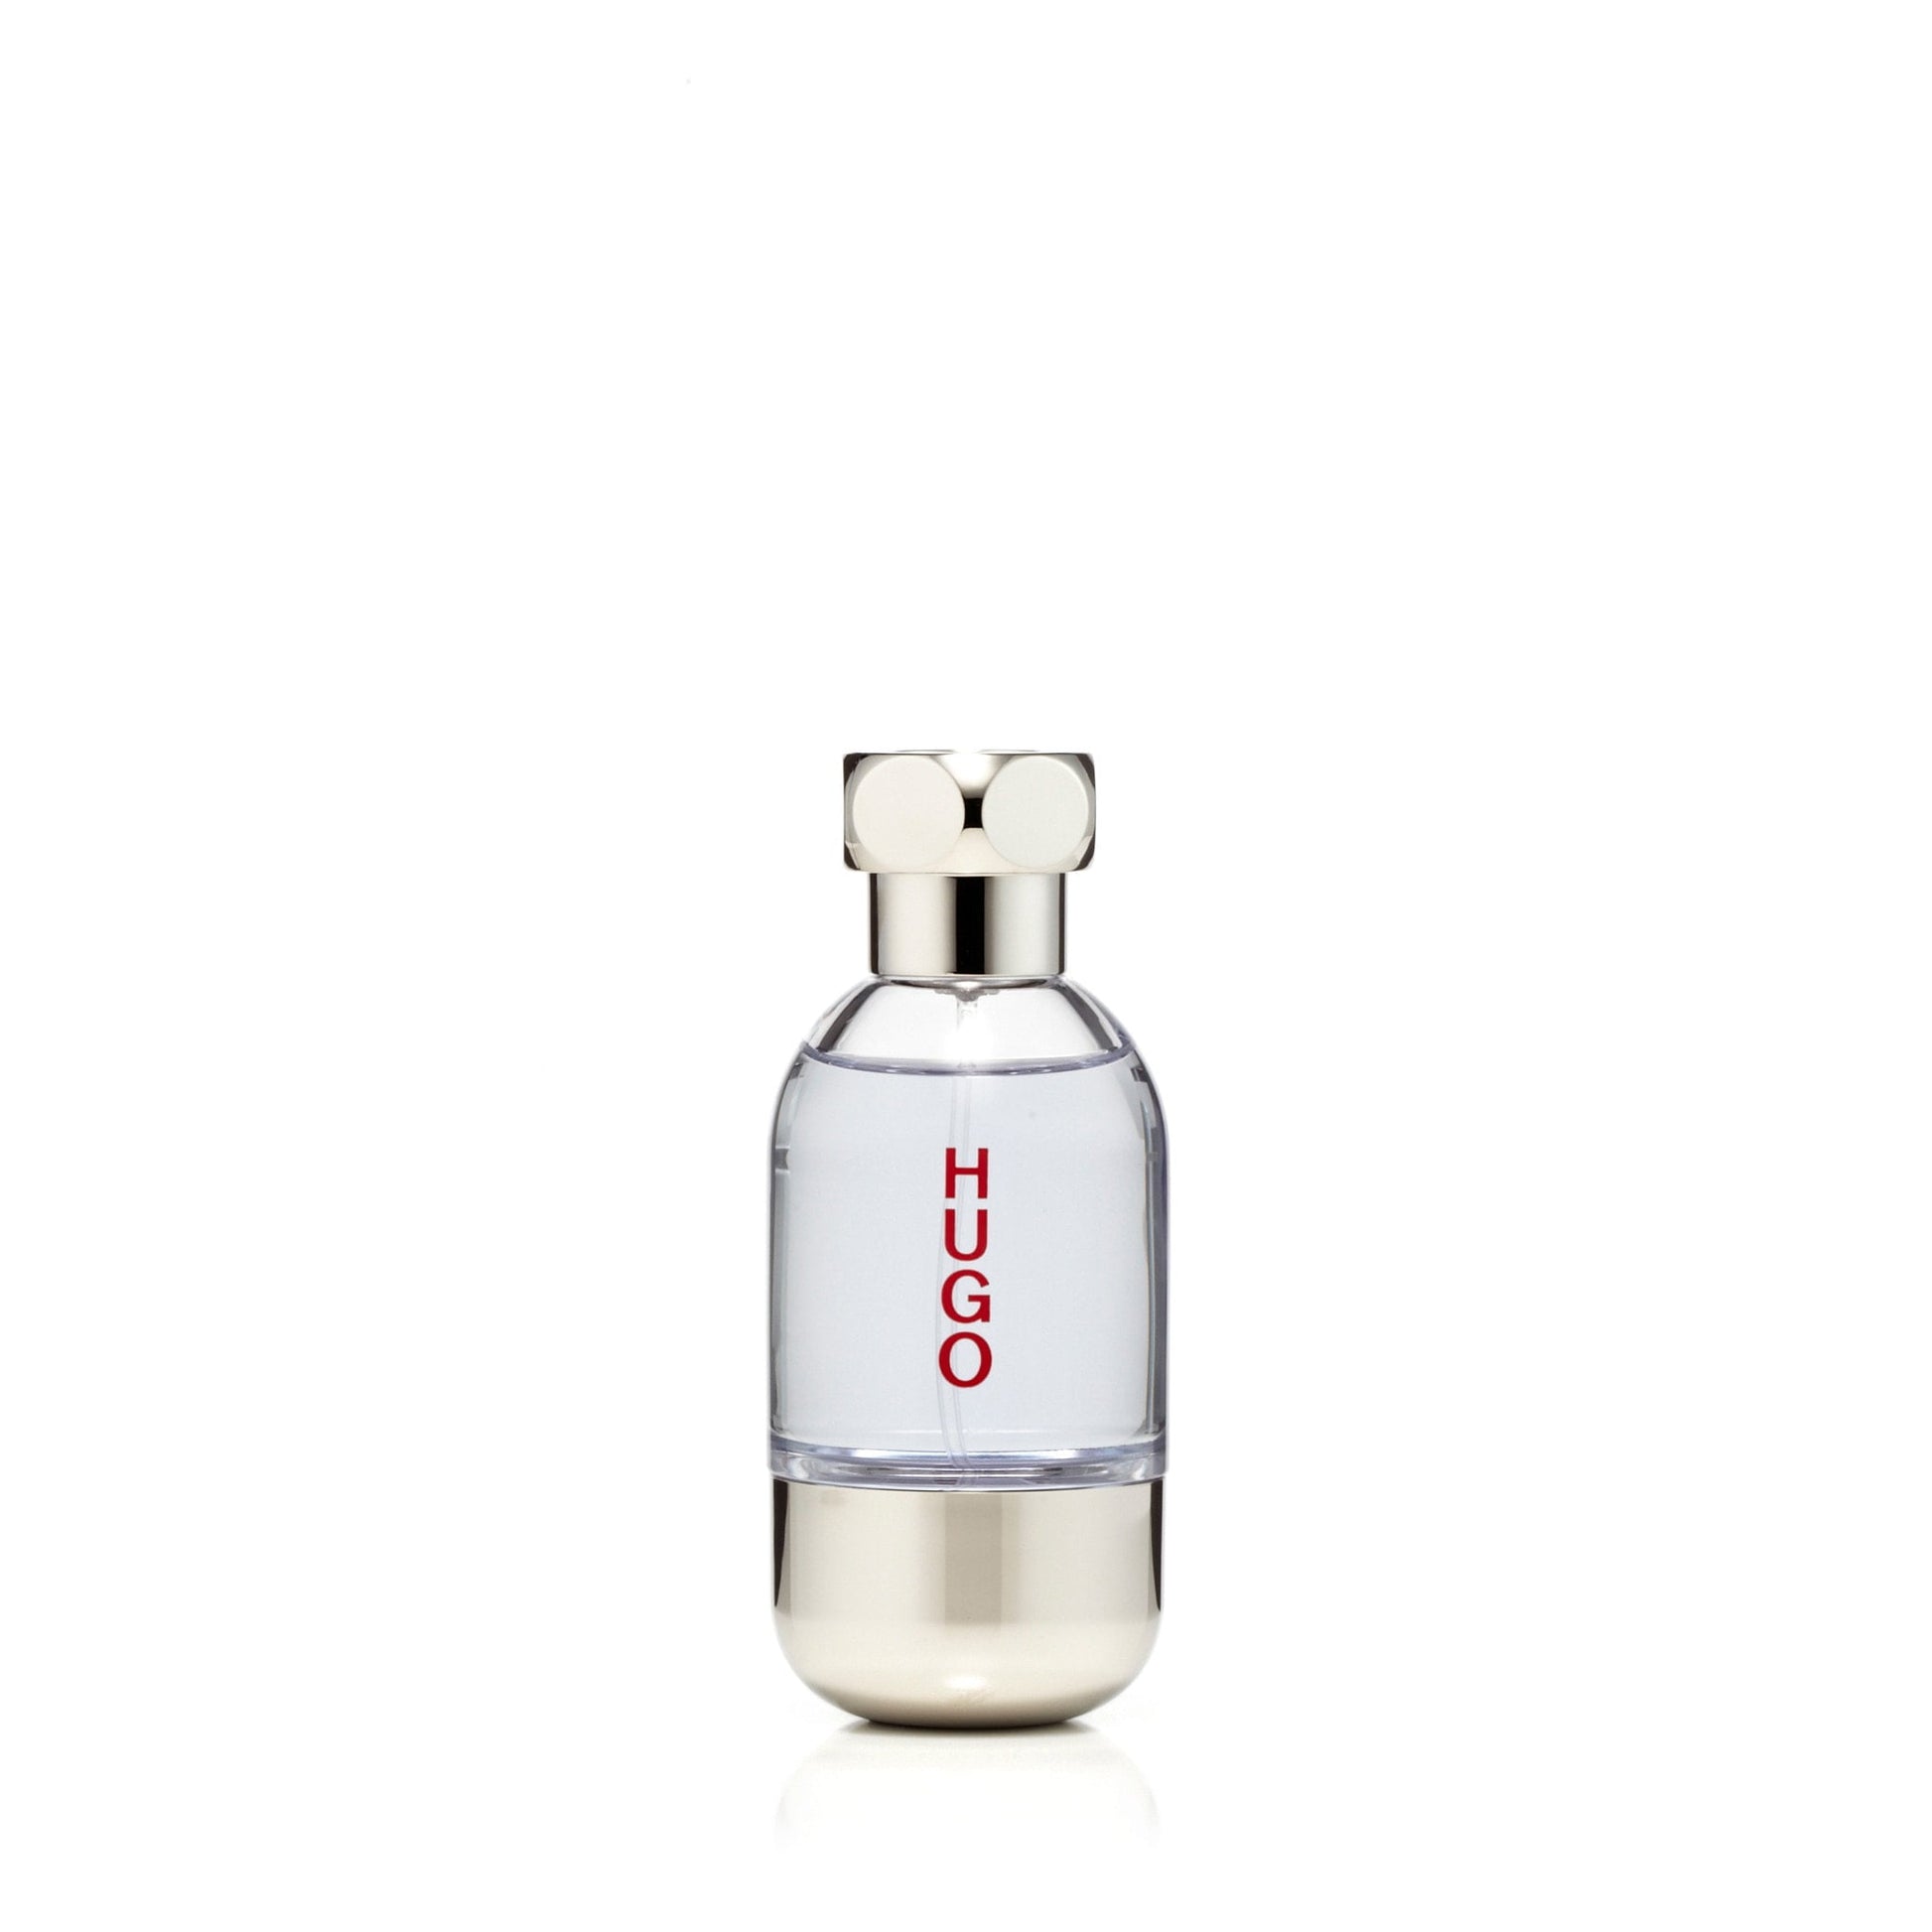 Hugo Boss Element Eau de Toilette Spray for Men by Hugo Boss, Product image 2